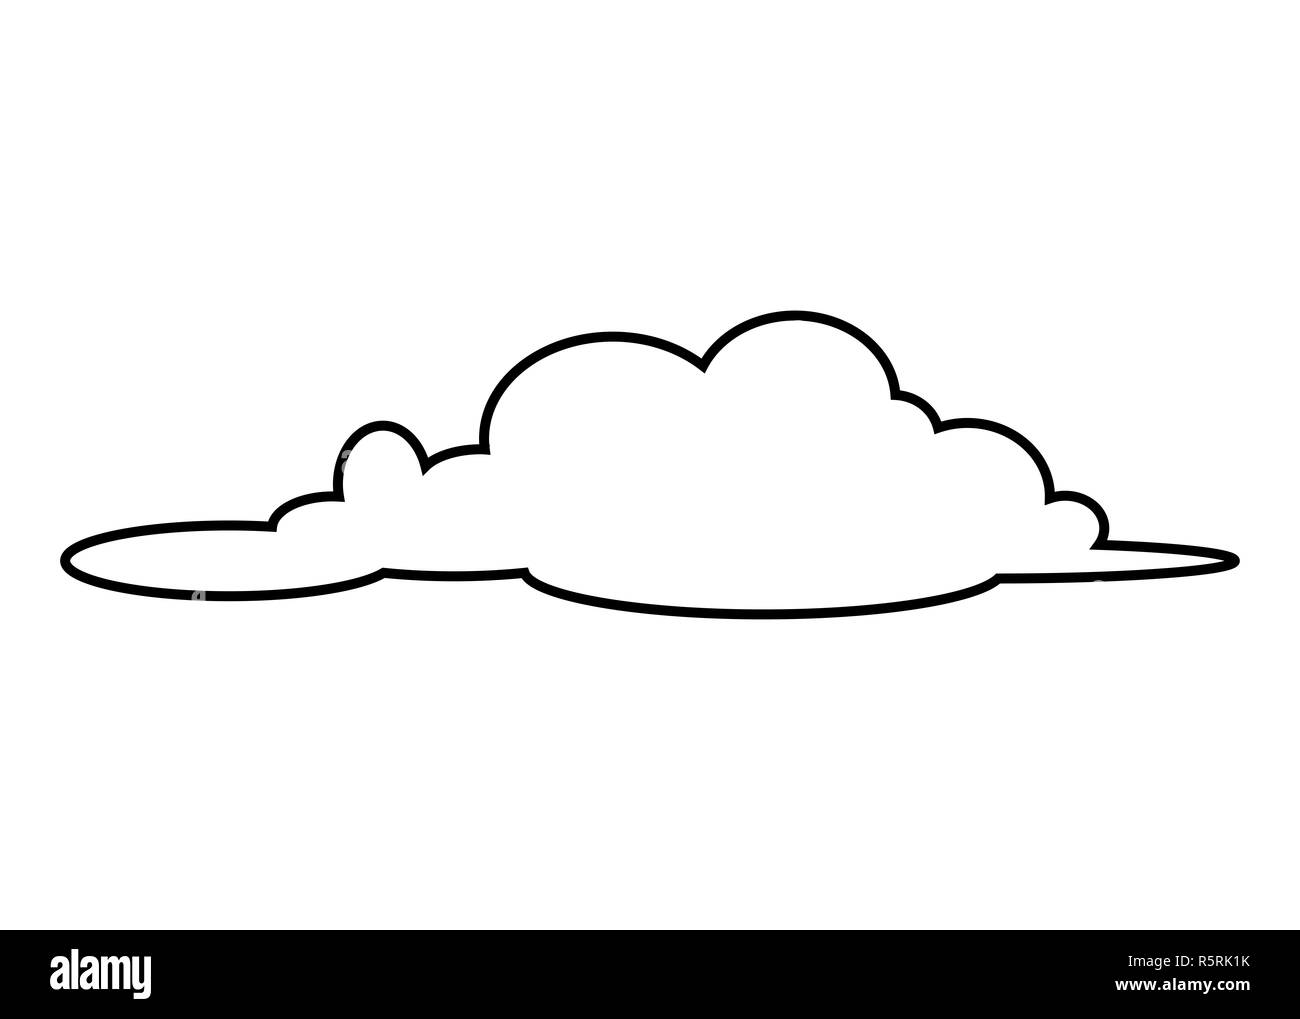 cloud silhouette vector symbol icon design Stock Photo - Alamy